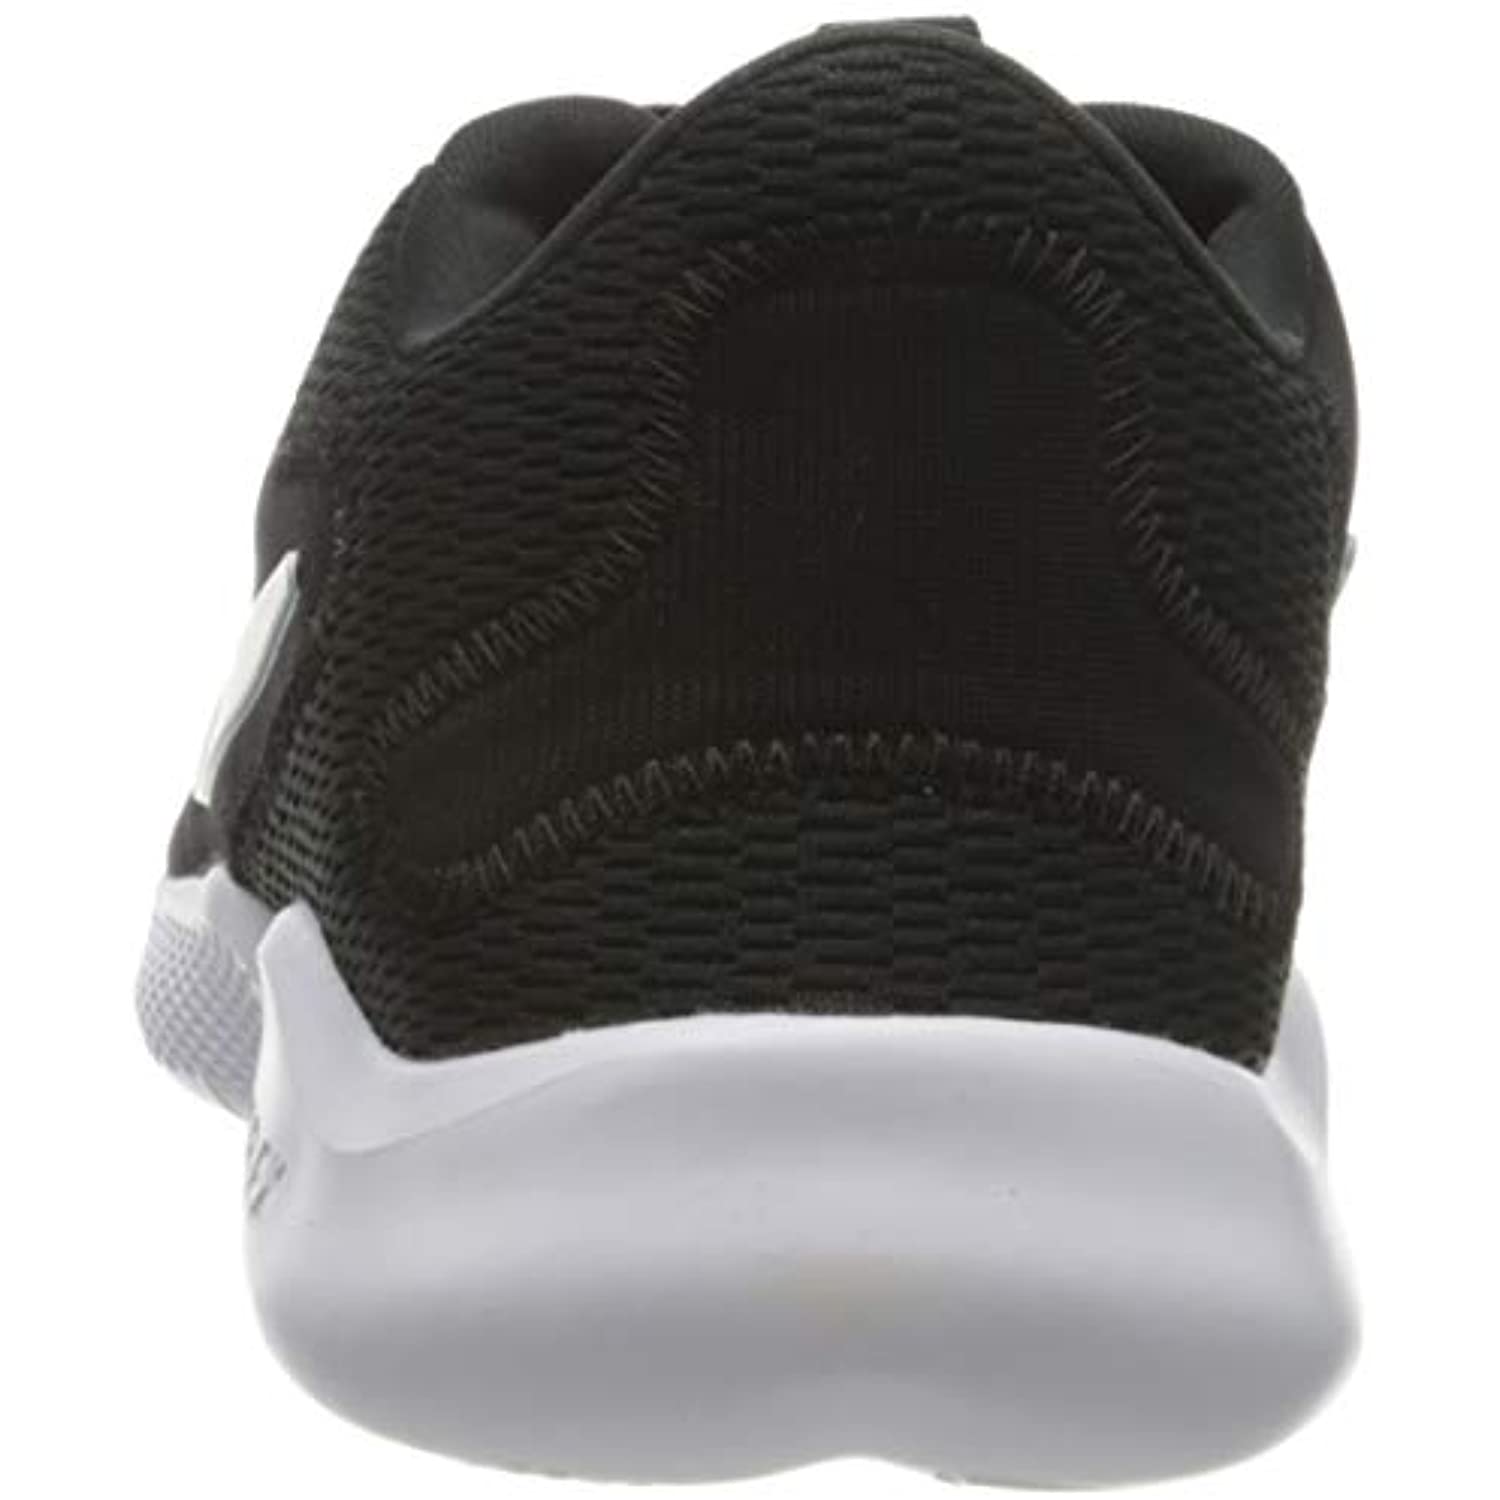 Nike Men's Flex Experience Run 9 Shoe, Black/White-Dark Smoke Grey, 9.5 Regular US - image 5 of 7